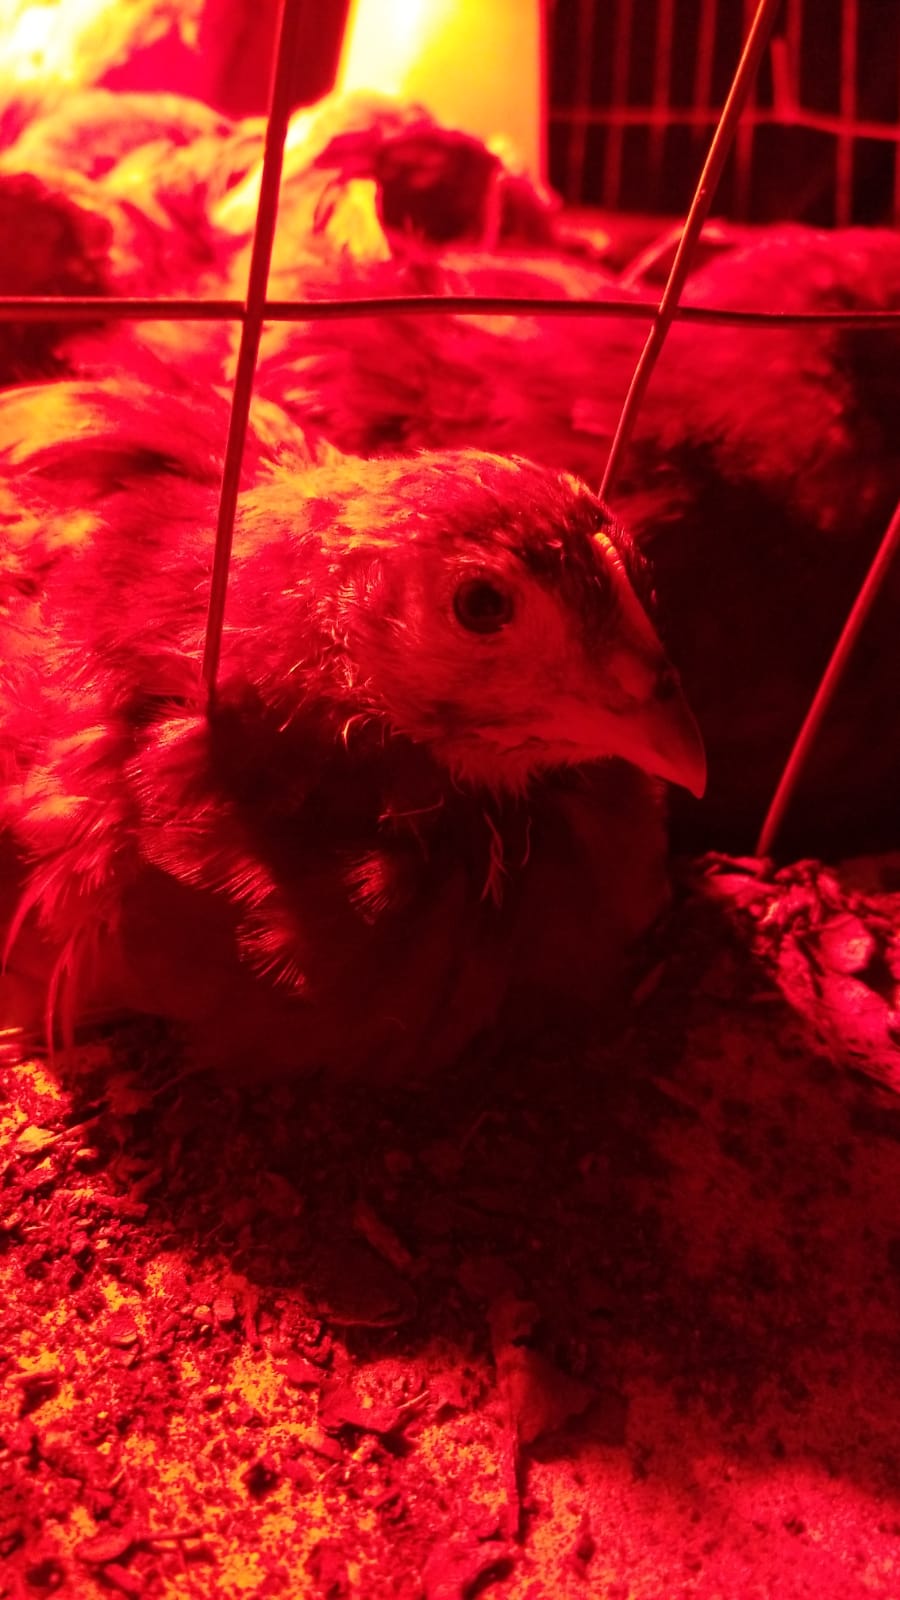 young-chicken-under-heat-lamp